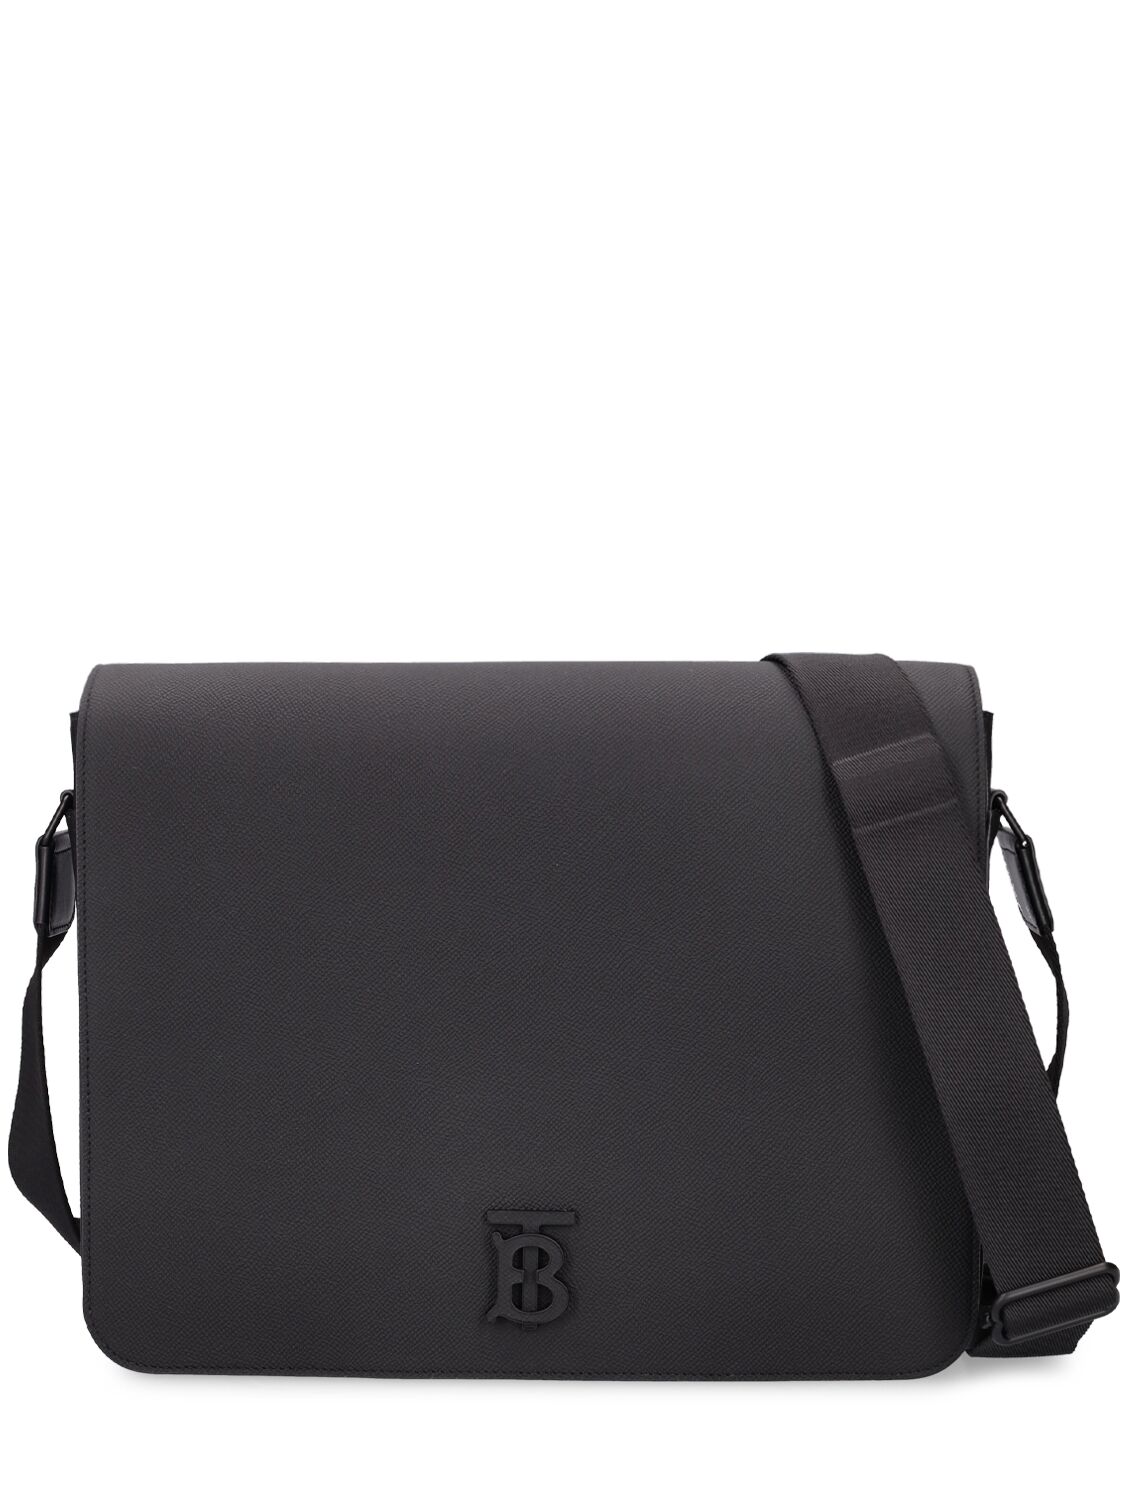 Image of Medium Alfred Crossbody Leather Bag